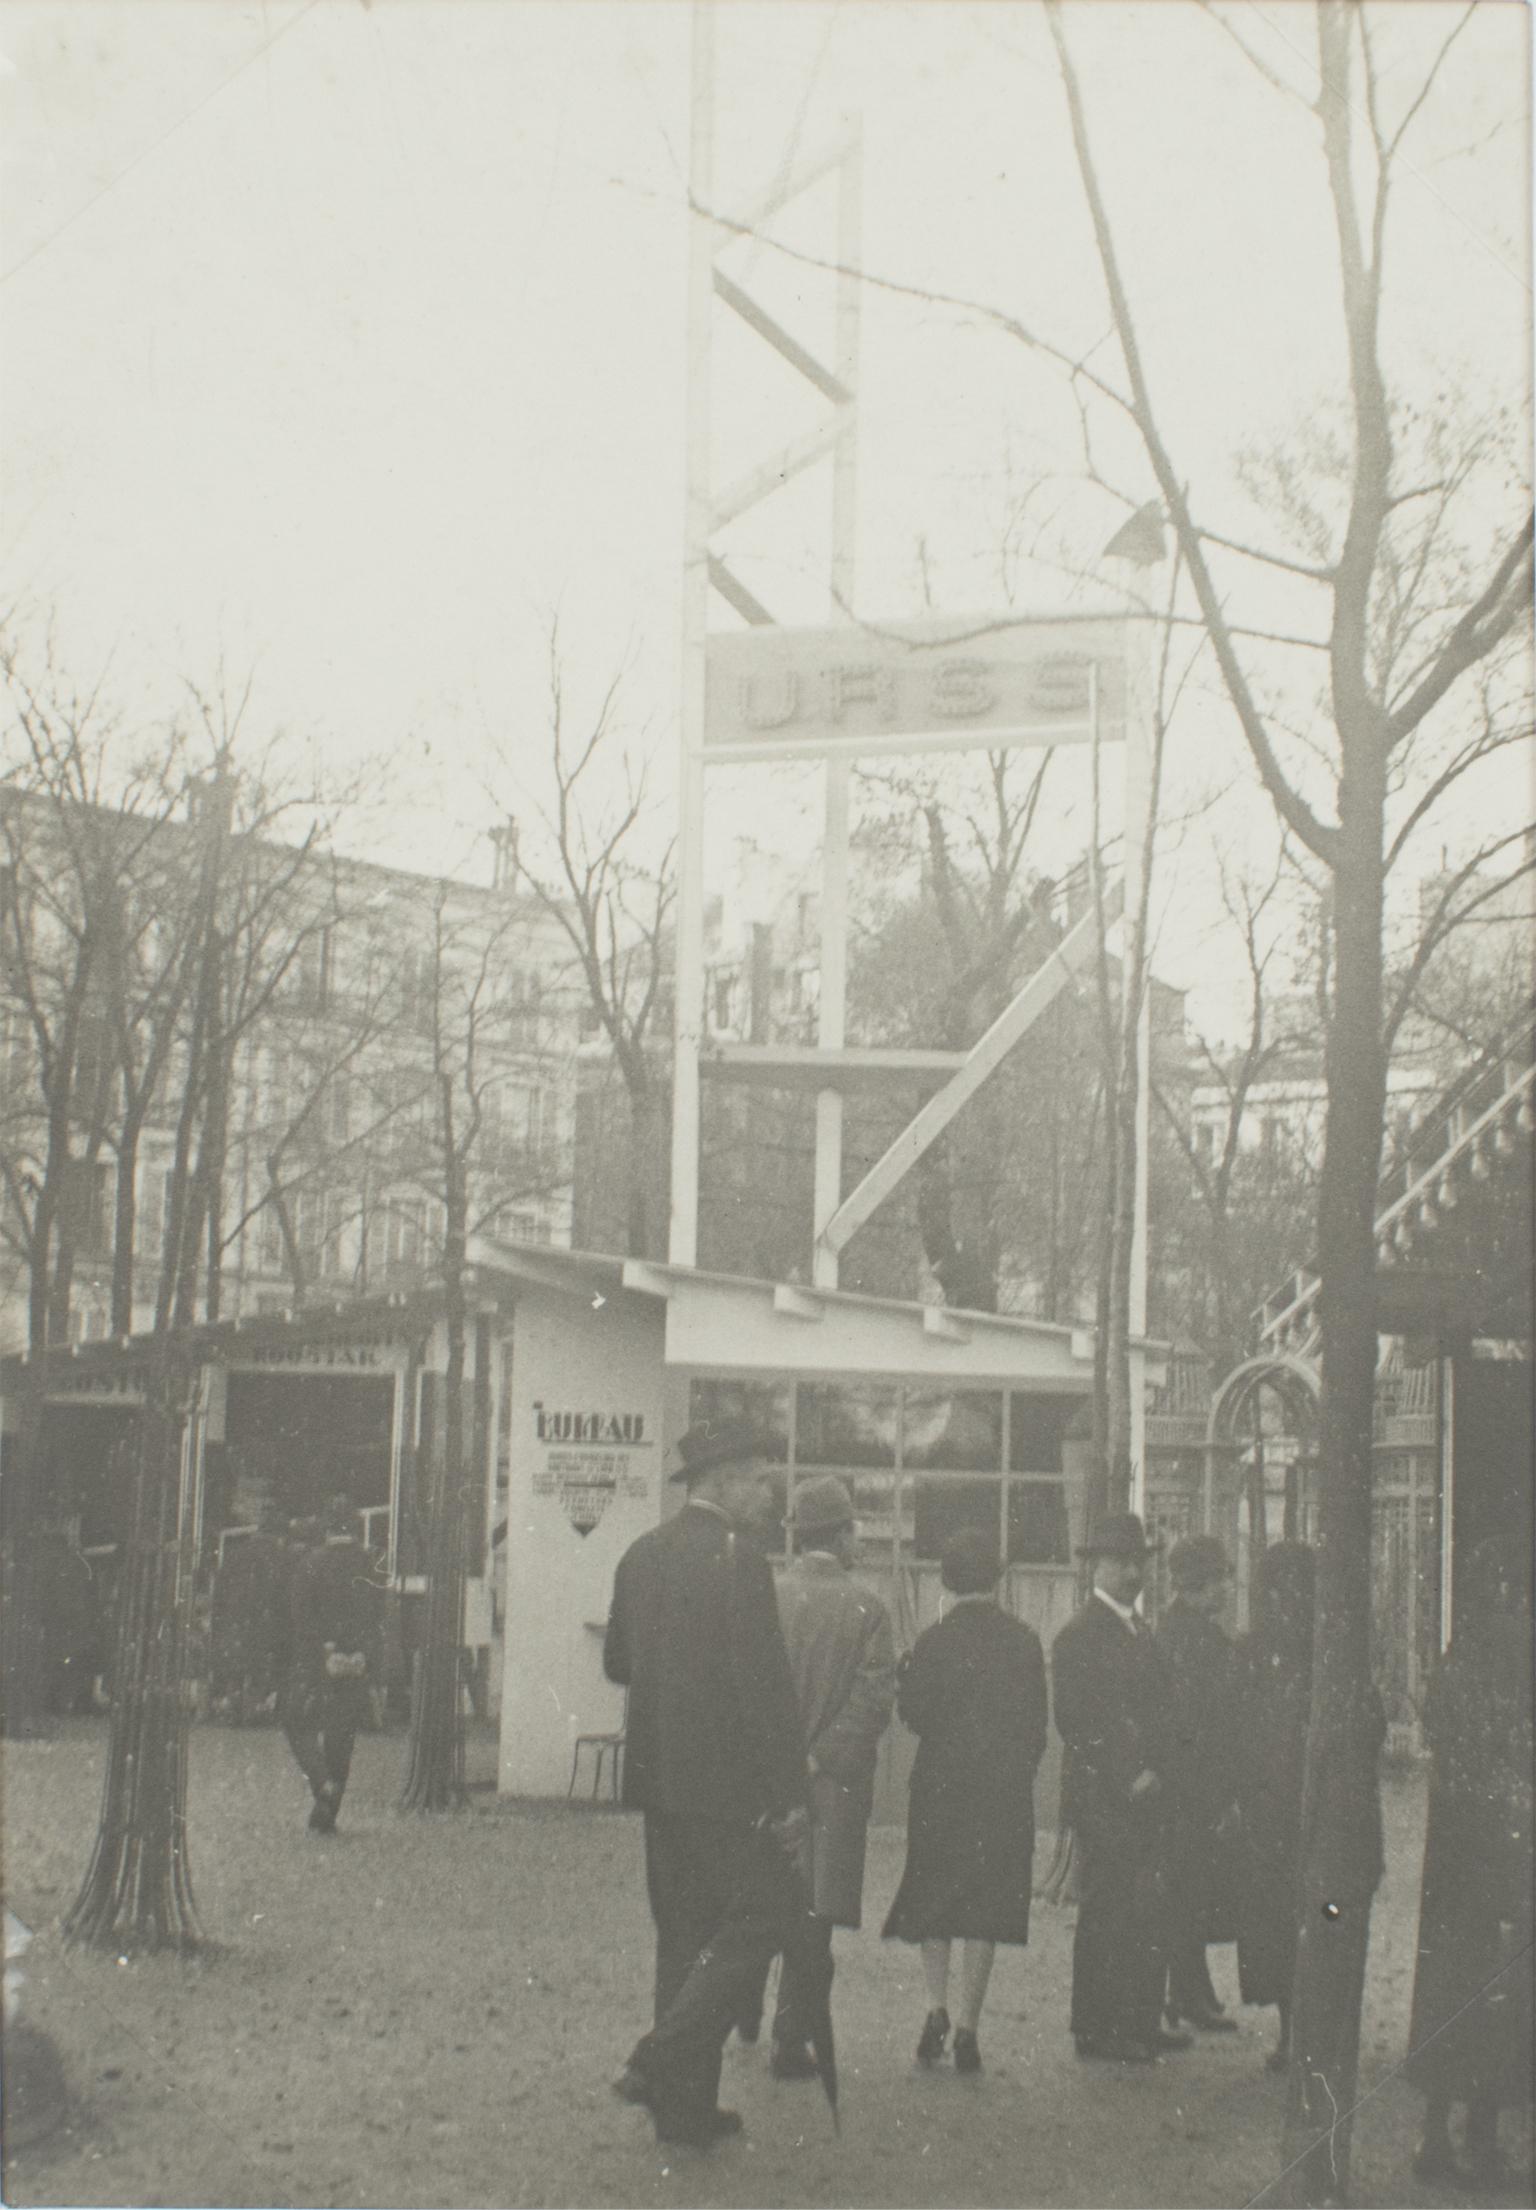 Paris, Decorative Art Exhibition 1925, The Russian Pavilion, B and W Photography